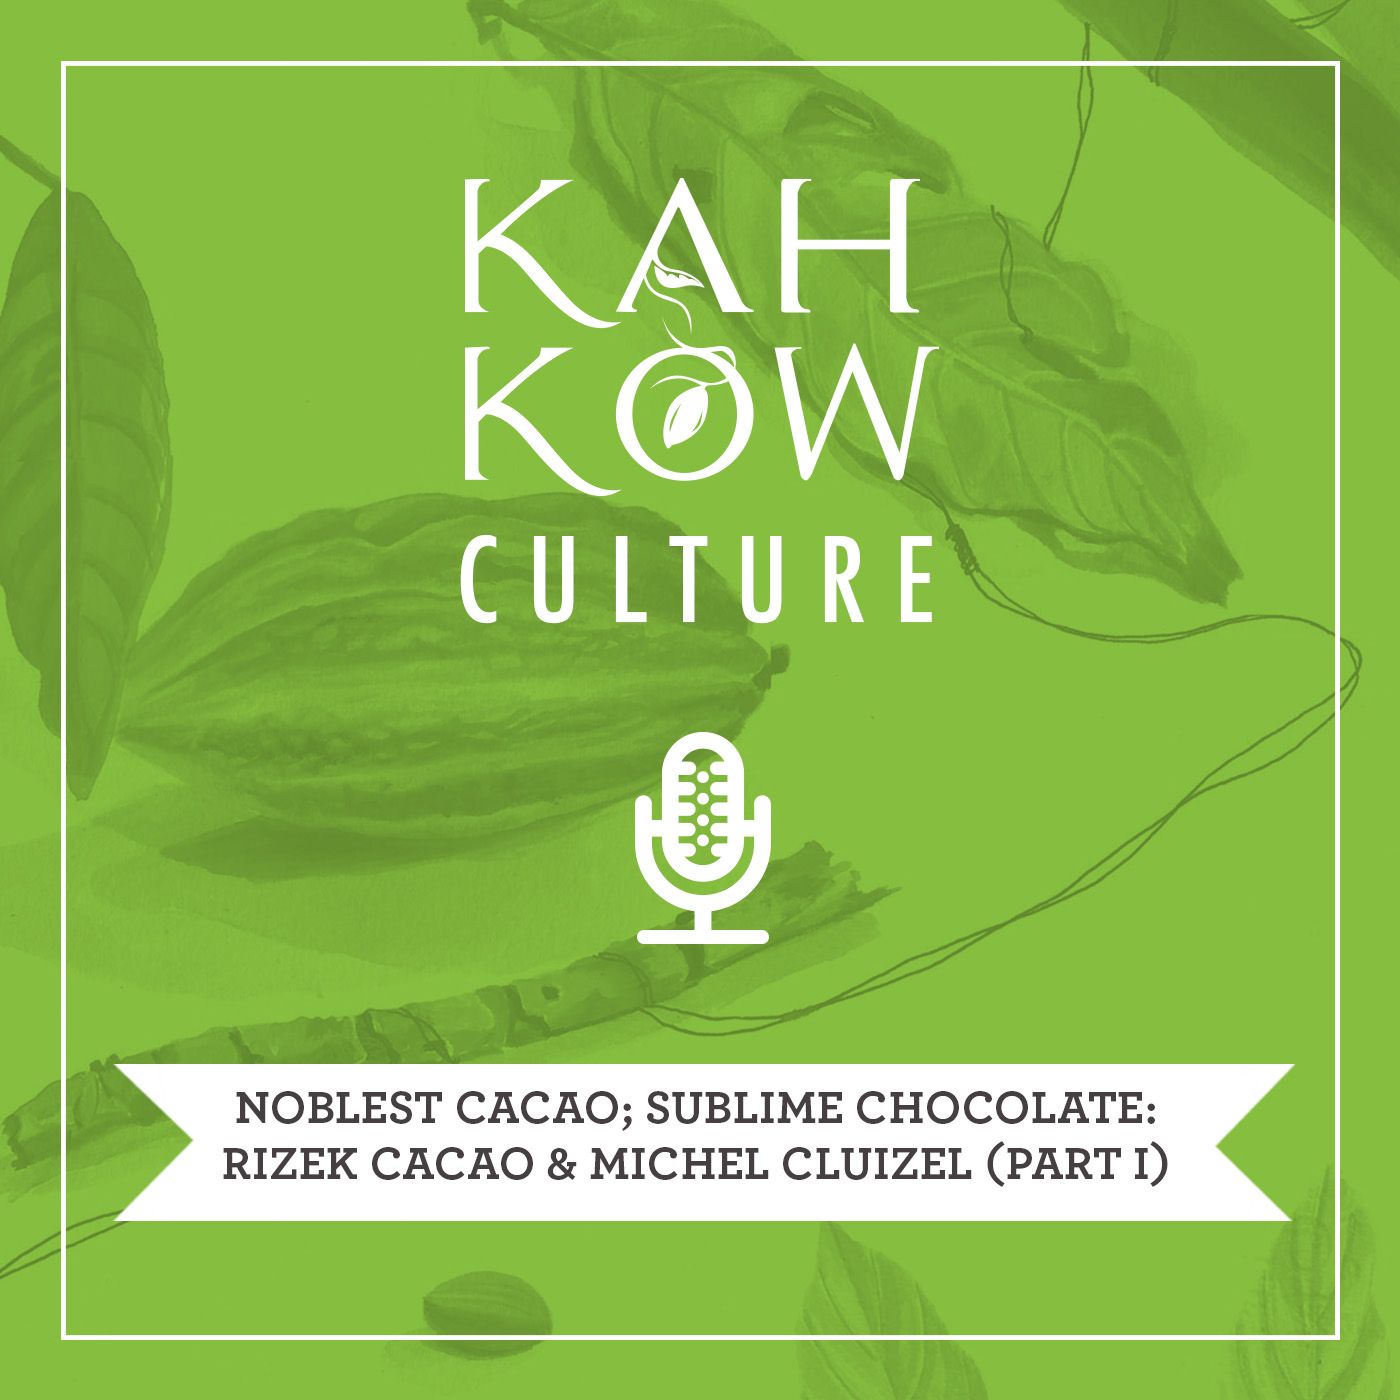 Cacao tradition: Rizek Cacao & Michel Cluizel